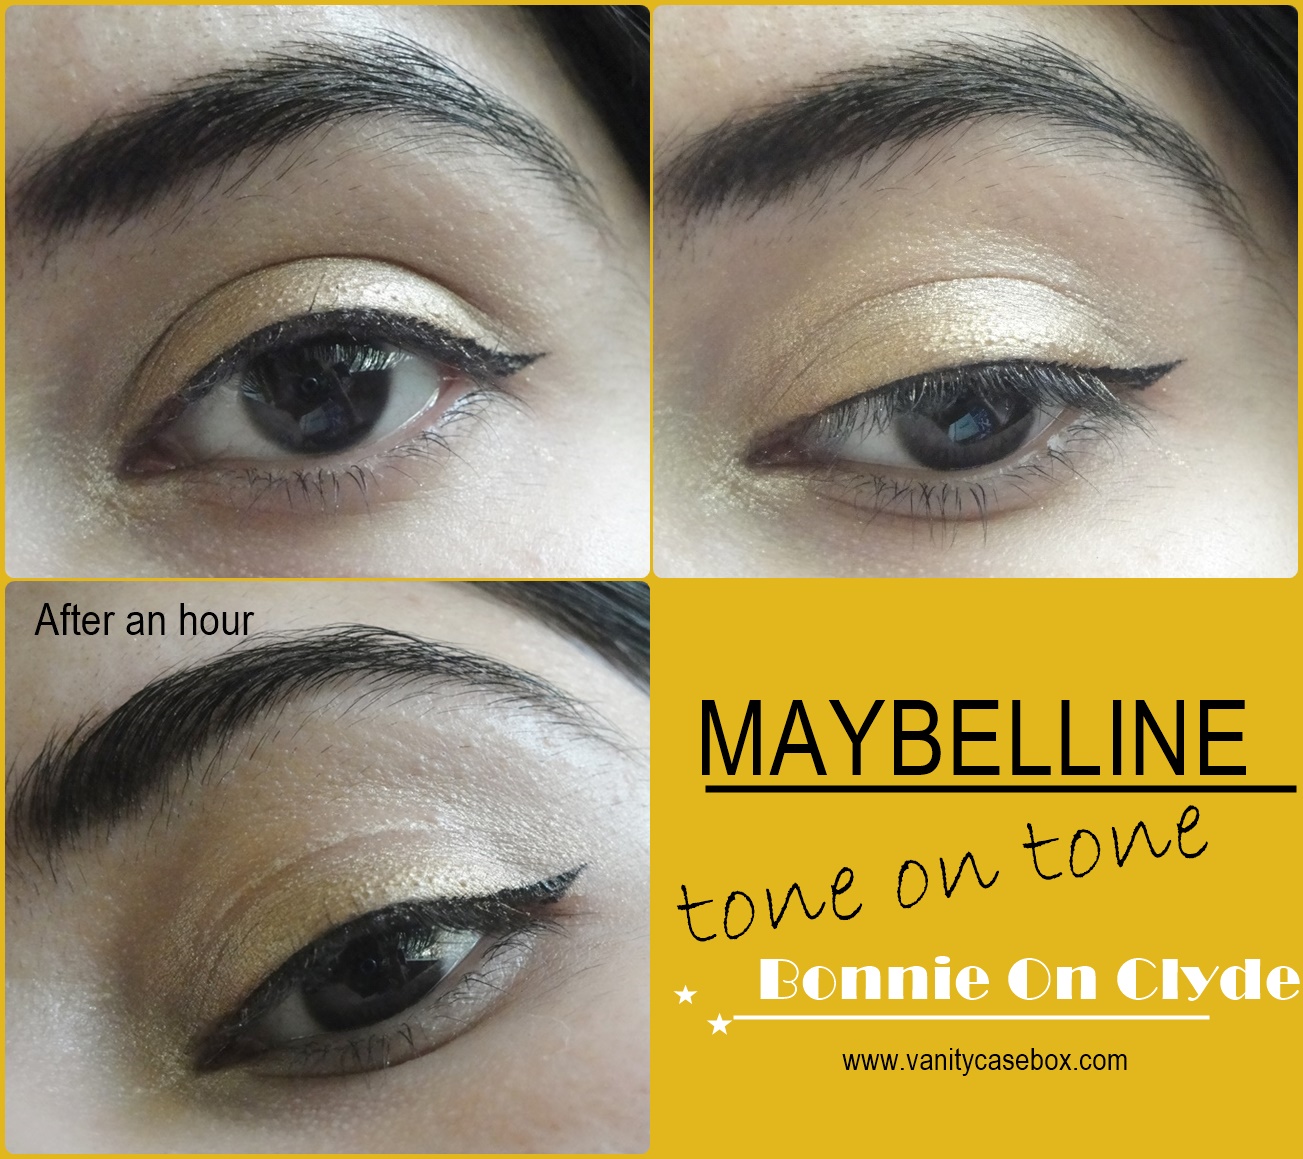 Maybelline tone on tone eyeshadow how to use